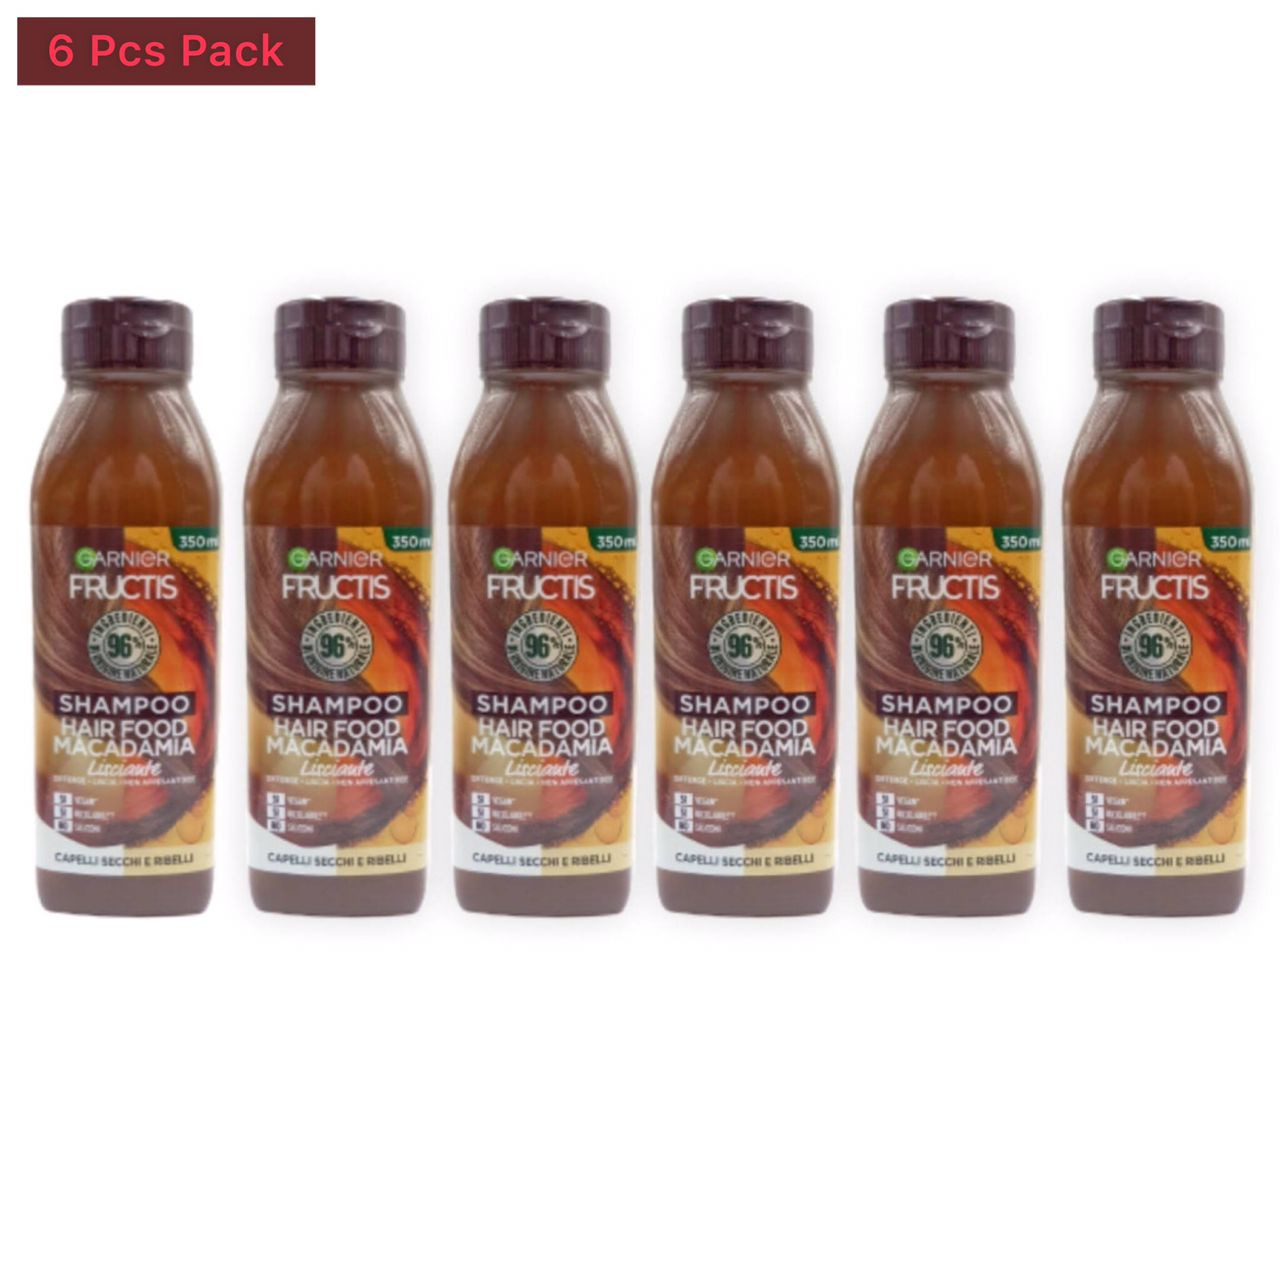 6 Pcs Garnier Smoothing Macadamia Hair Food Shampoo(6X350ml)  (Cargo)